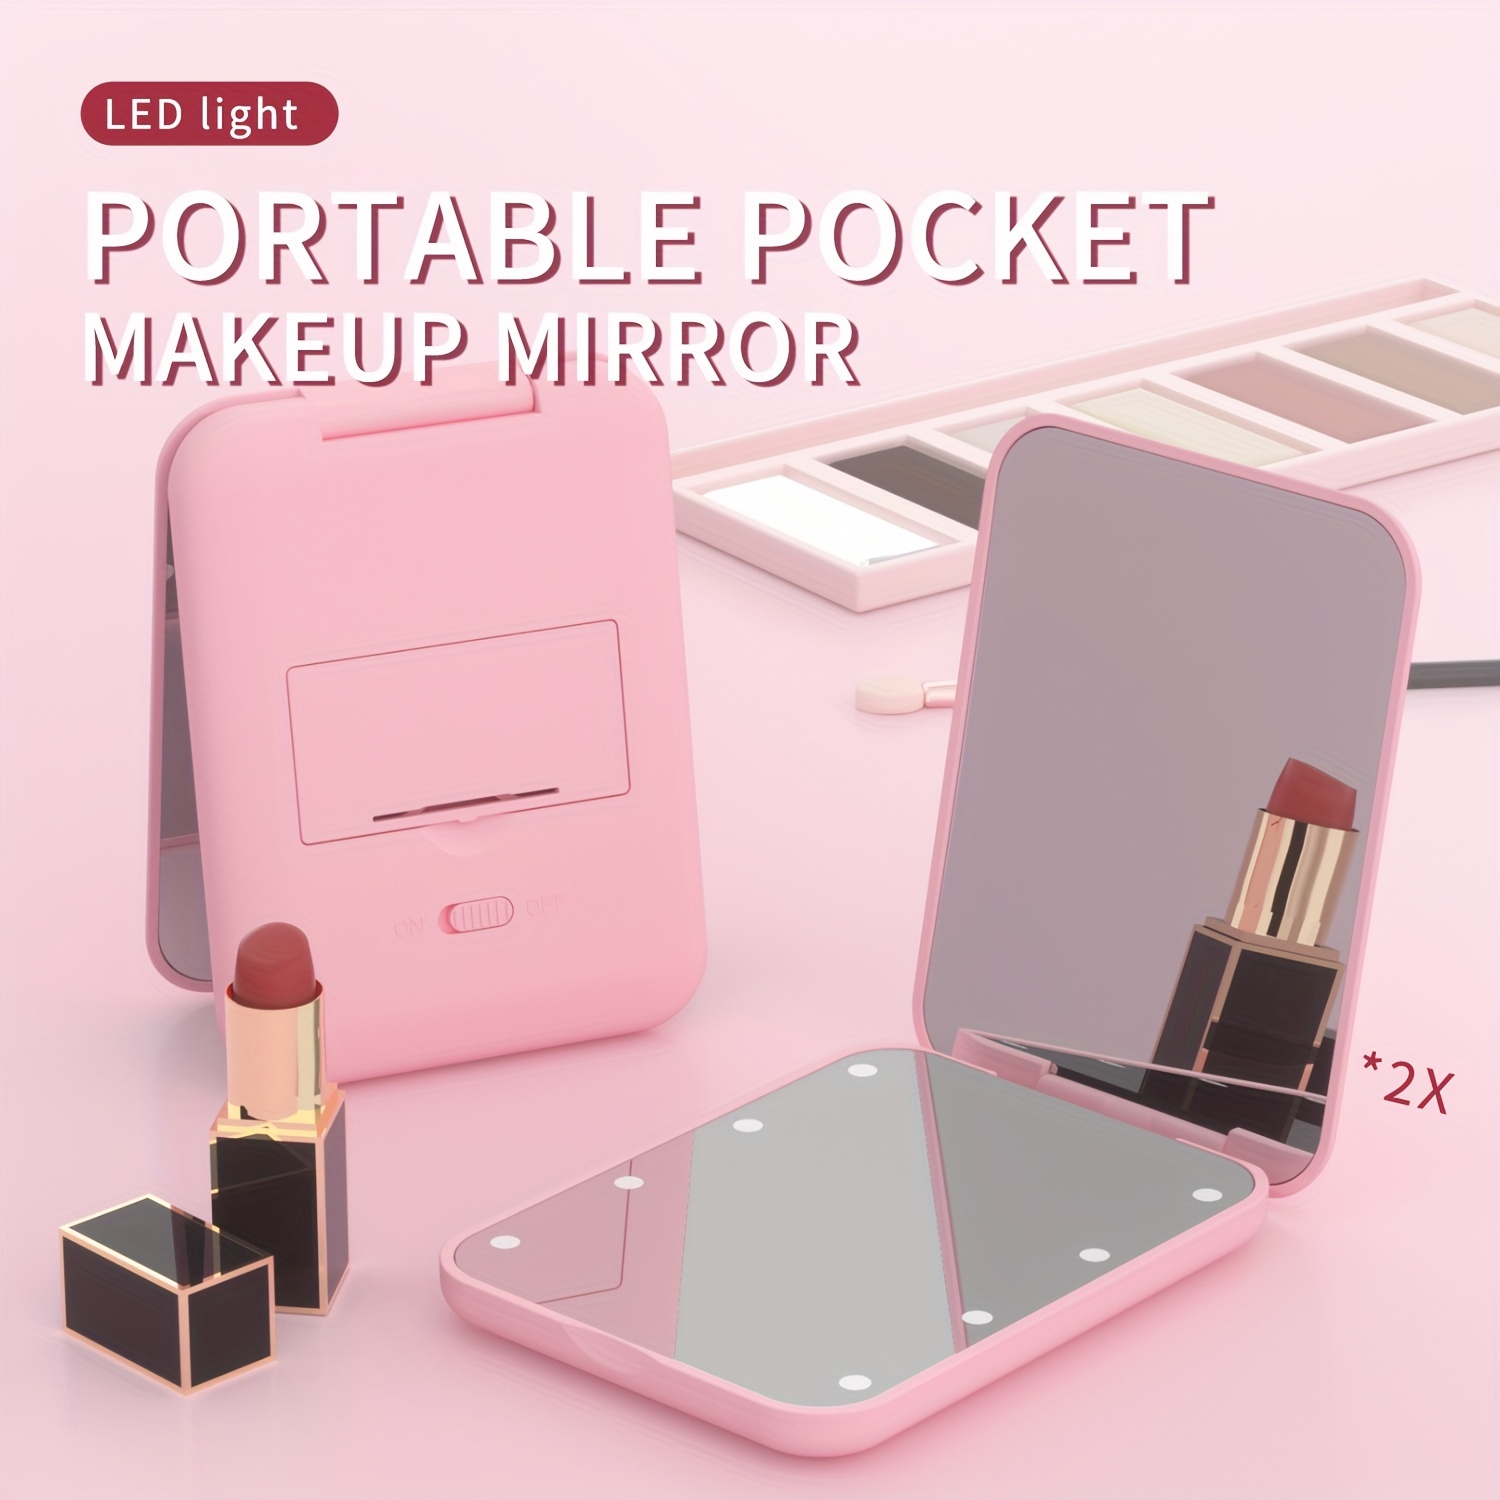  DeYesom Espejo compacto con luz, espejo de bolsillo LED,  aumento 1X/3X, mini espejo de viaje rosa, sin distorsión, espejo pequeño  portátil regulable para bolso, bolsillo, bolso y regalo : Belleza y